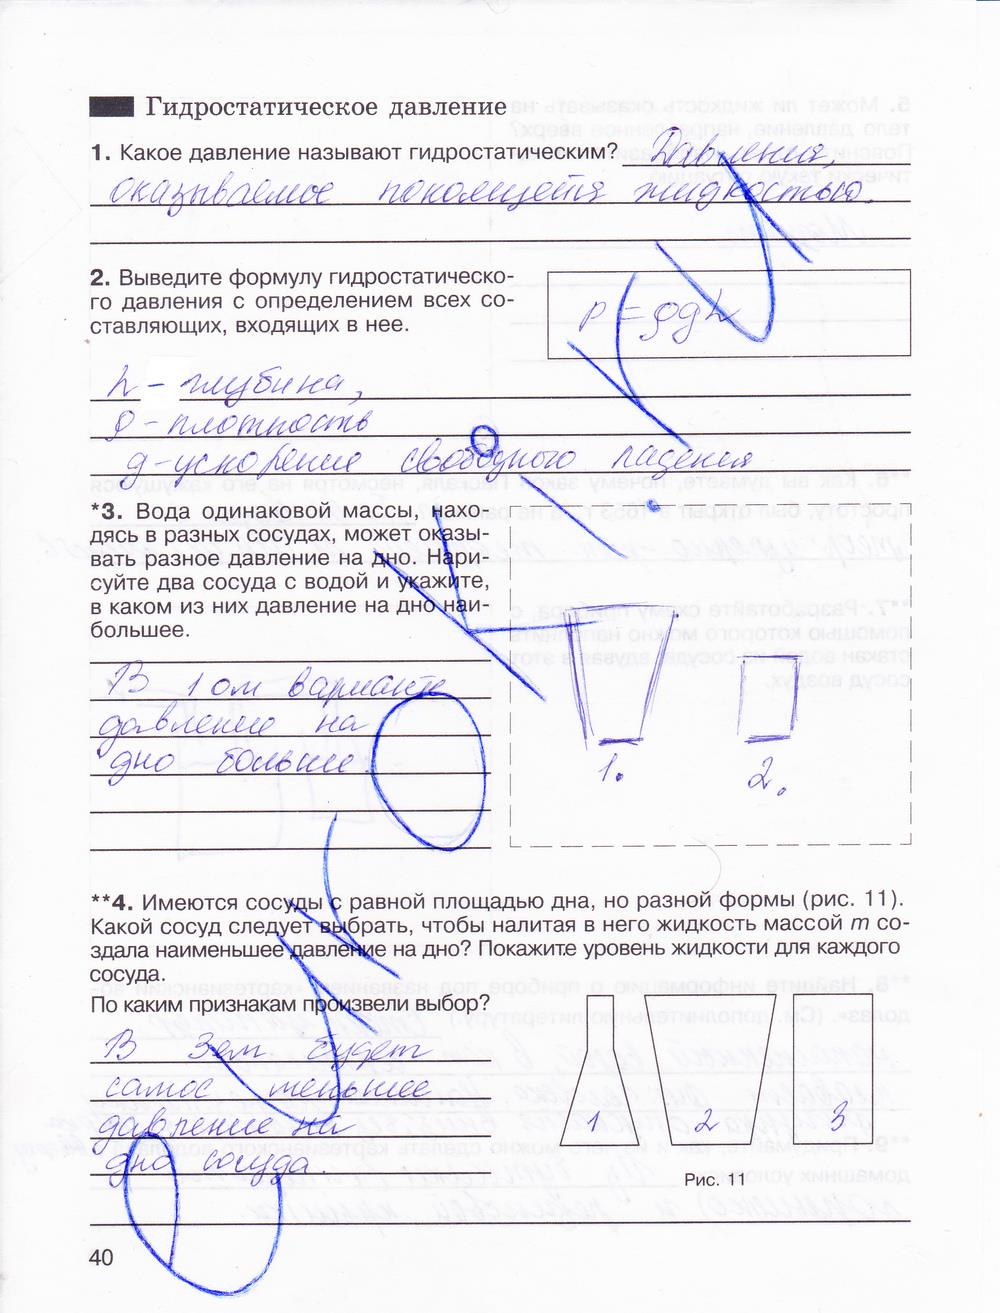 гдз 7 класс рабочая тетрадь страница 40 физика Мартынова, Бовин, Коротаев